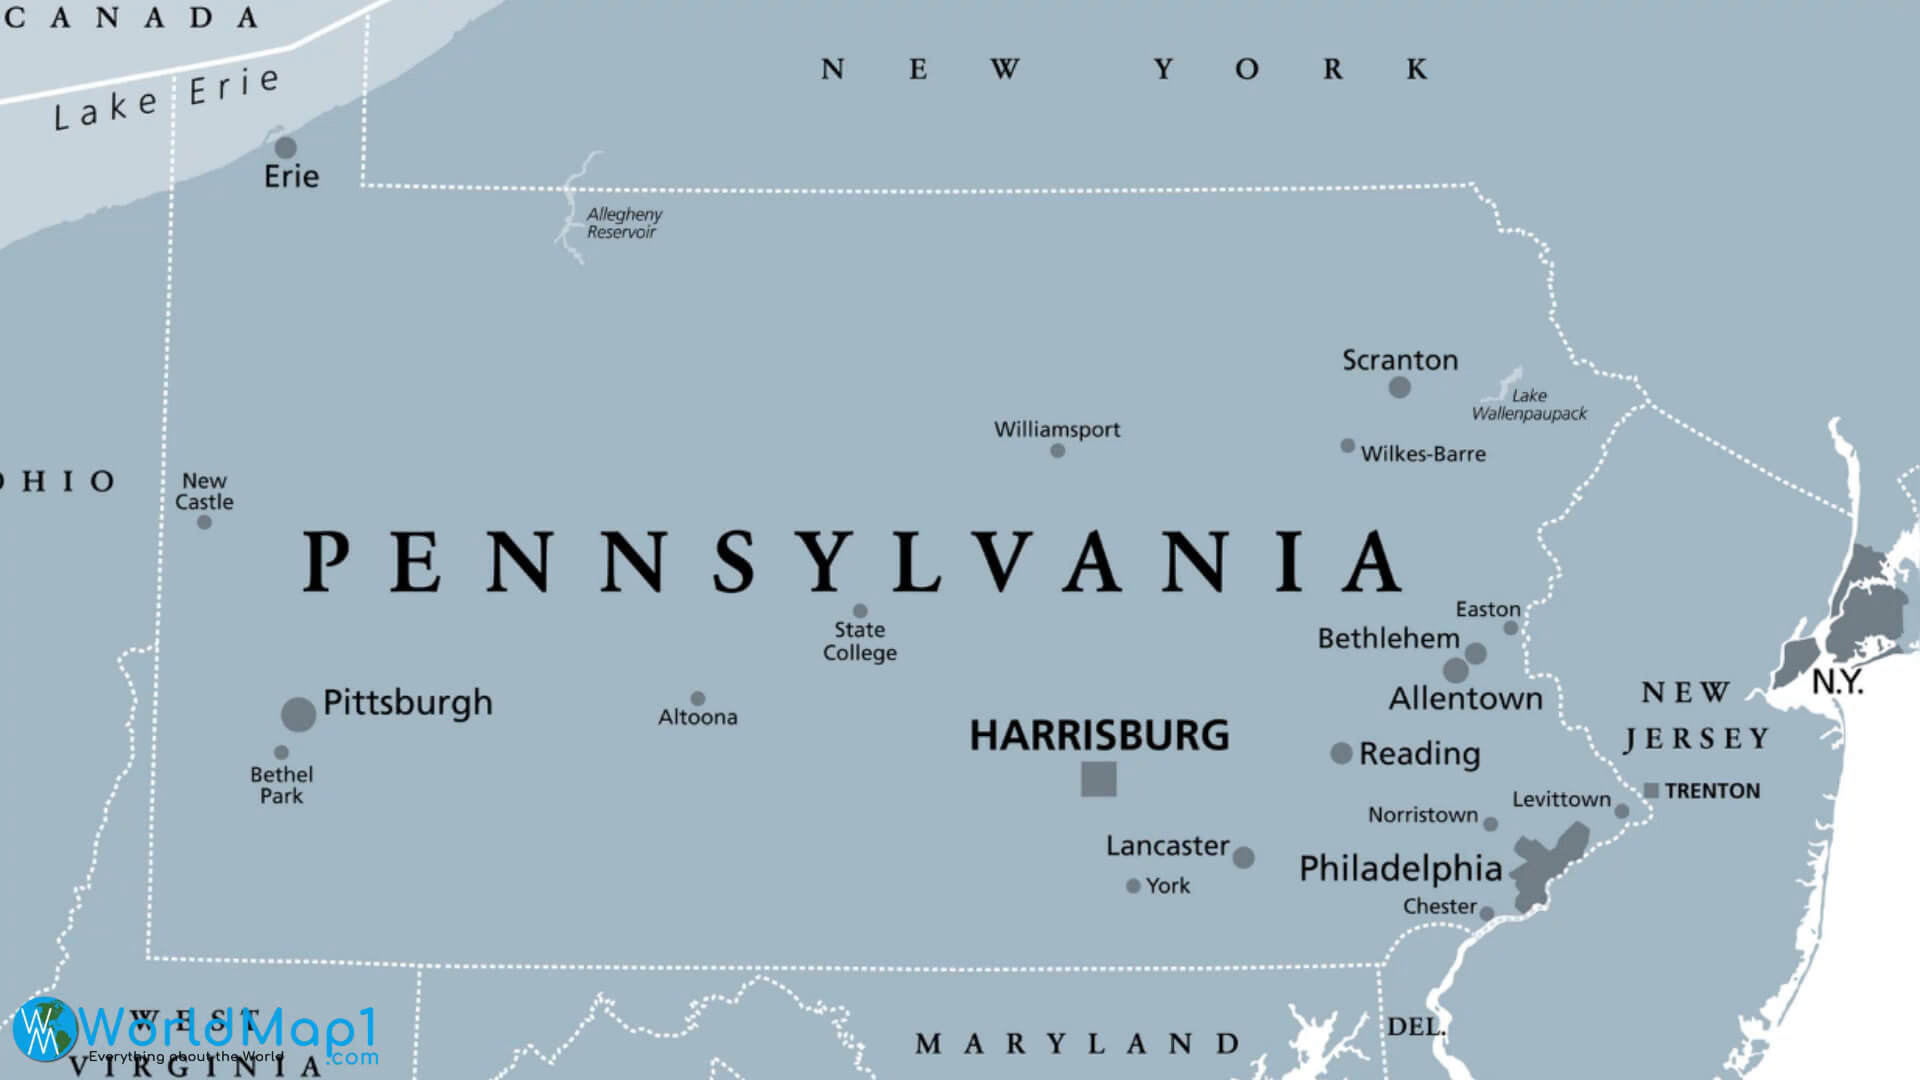 Major Cities Map of Pennsylvania